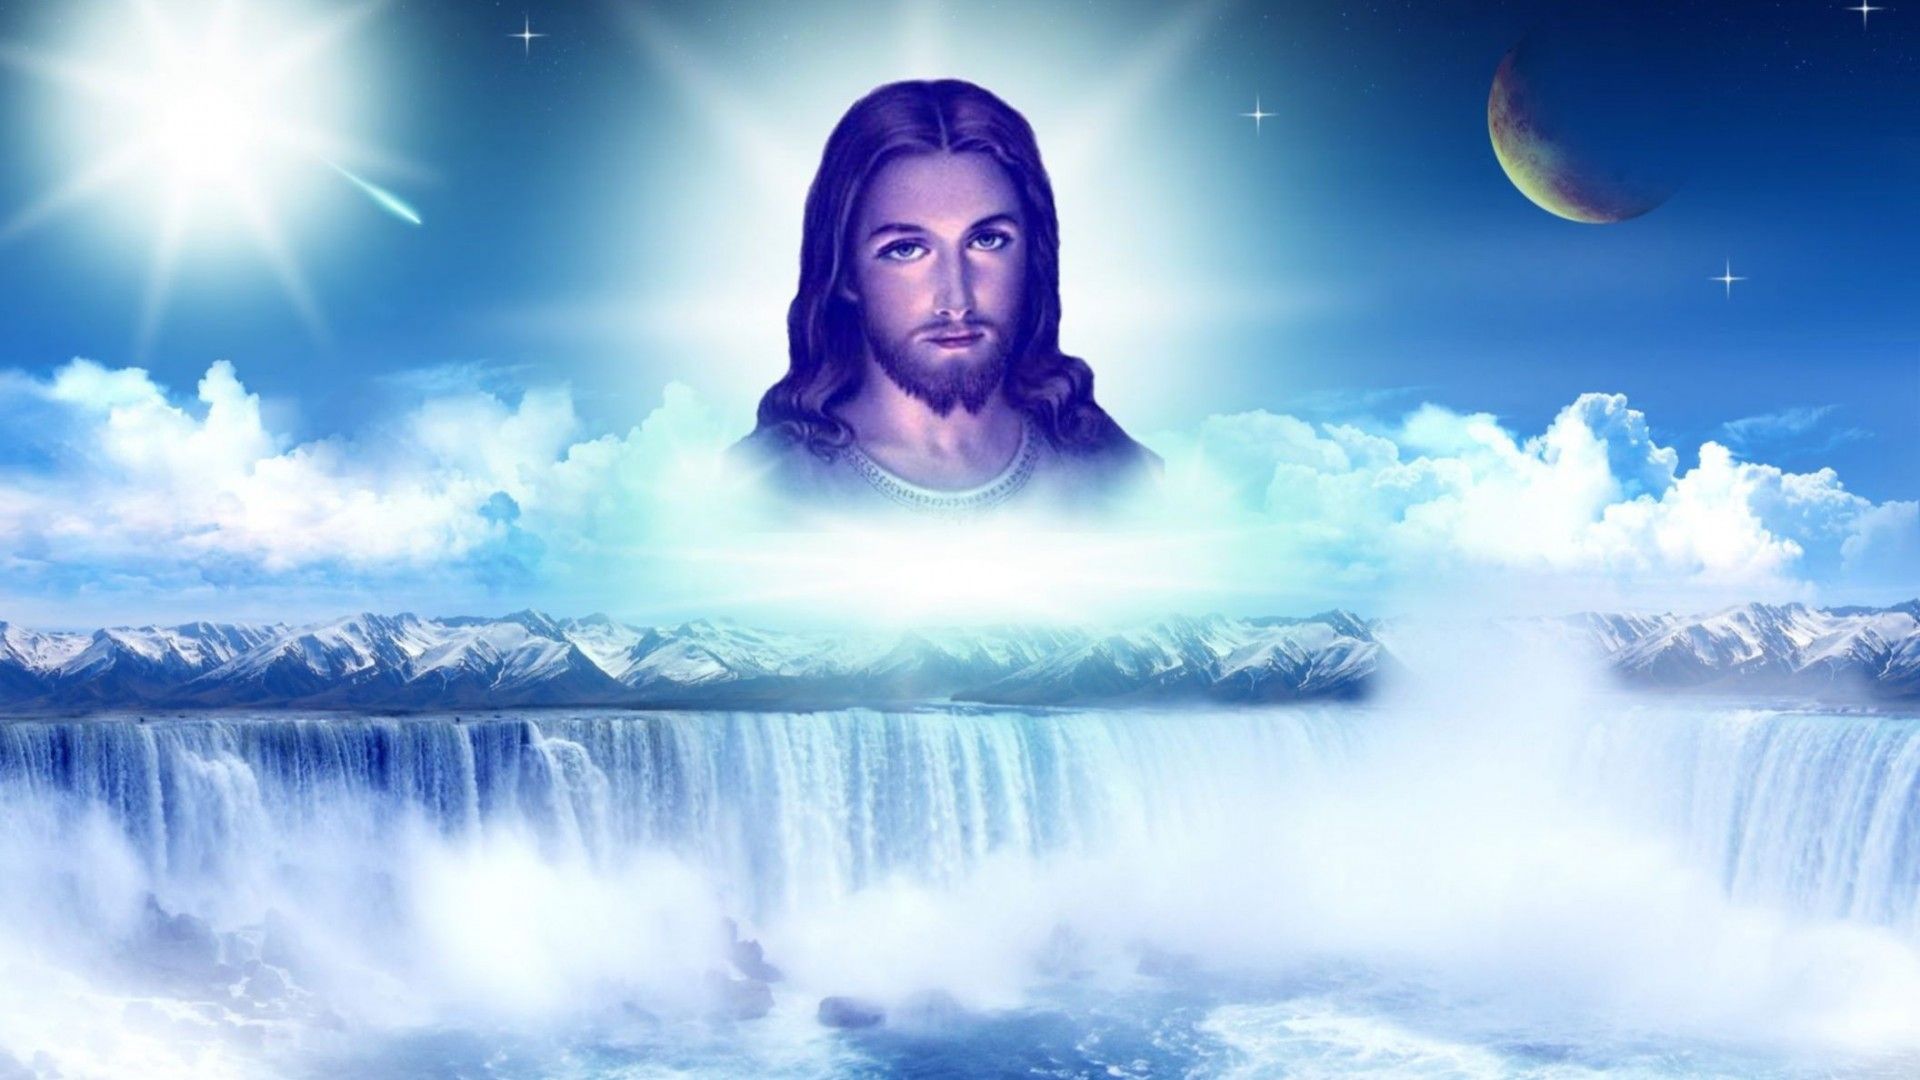 Beautiful Jesus High Resolution Wallpaper: Desktop HD Wallpaper Free Image, Picture, Photo on DailyHDWallpaper.com